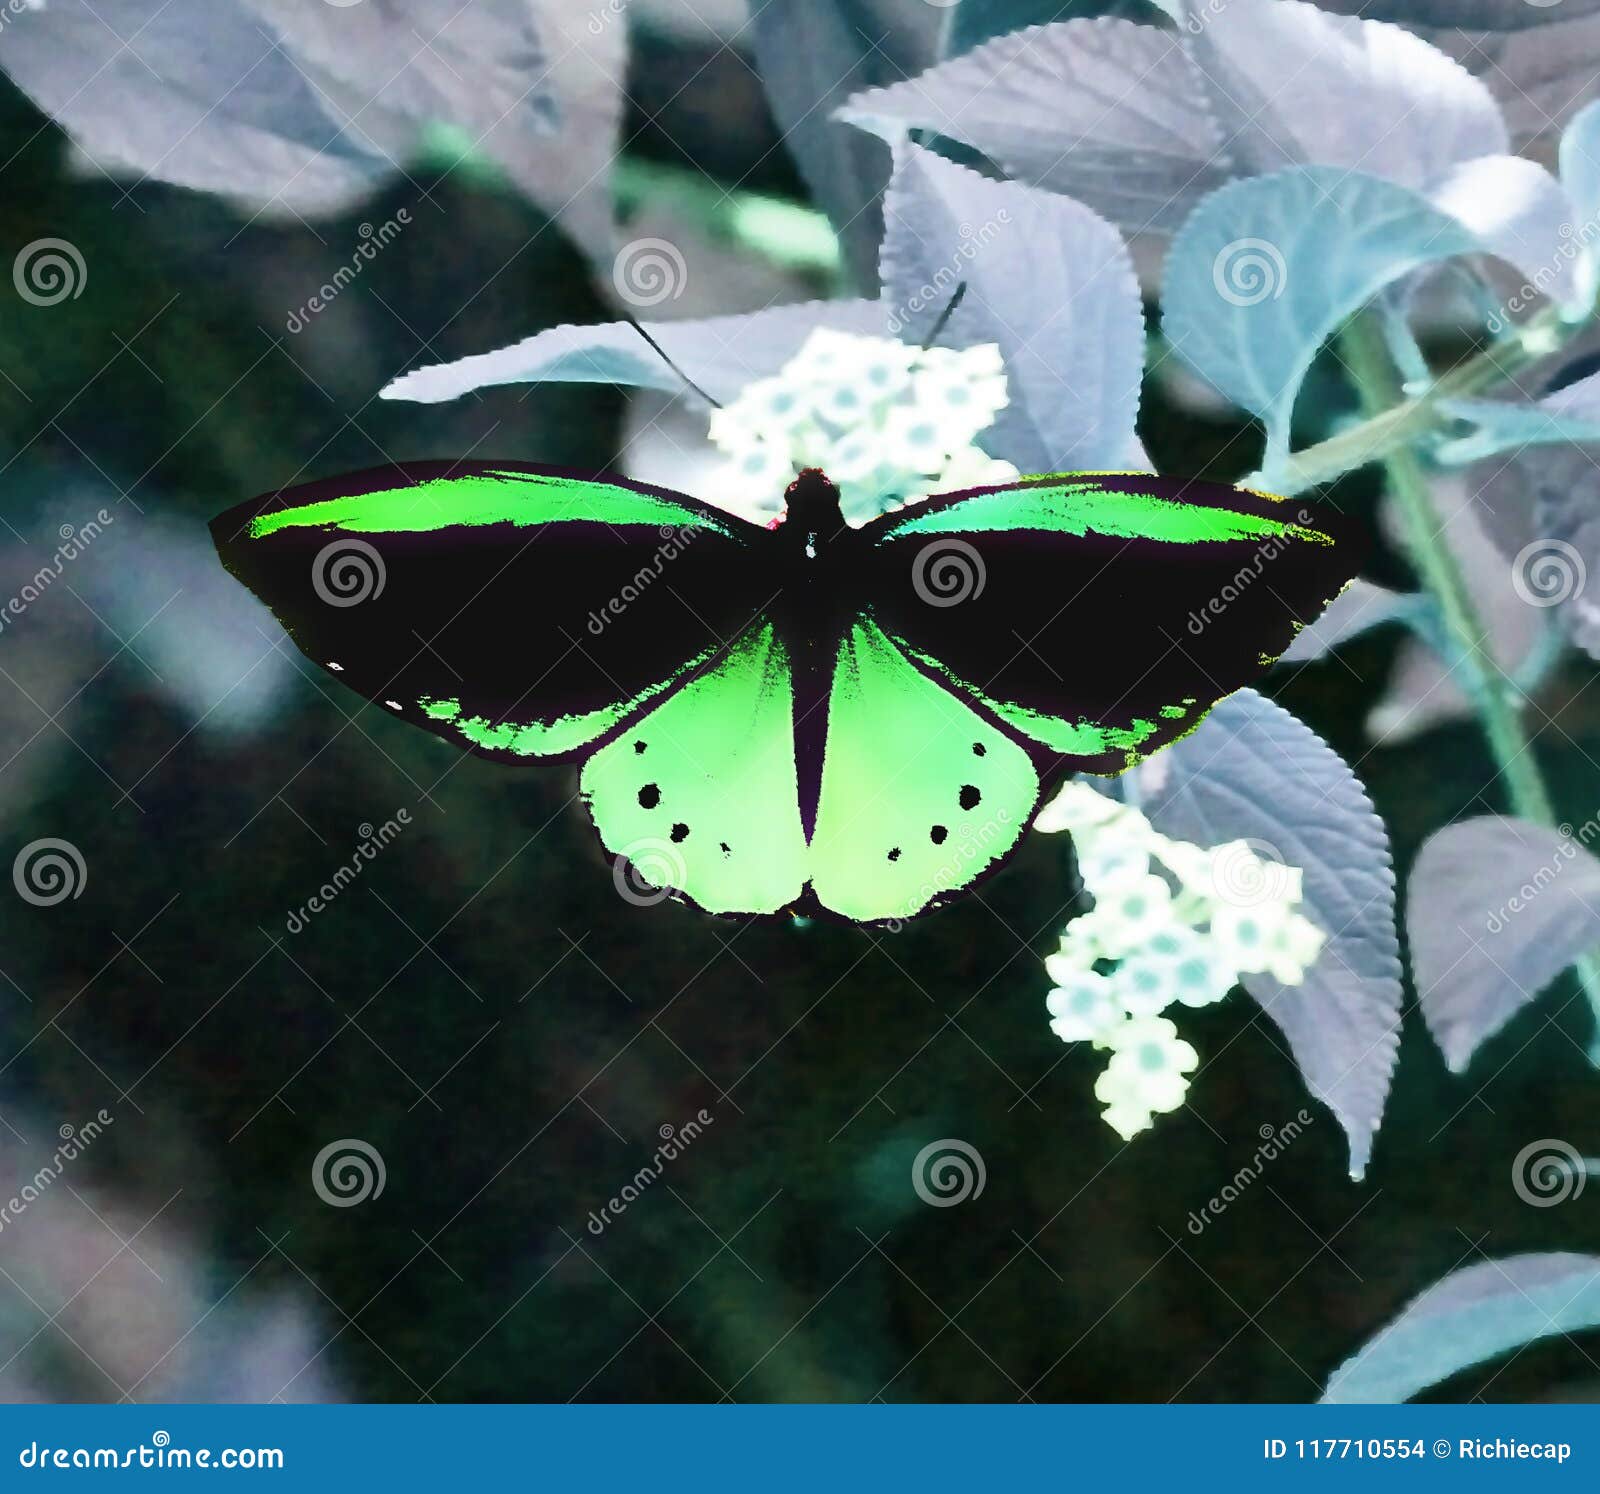 Wingspan of Australian Back-on Stock - Image butterfly, 117710554